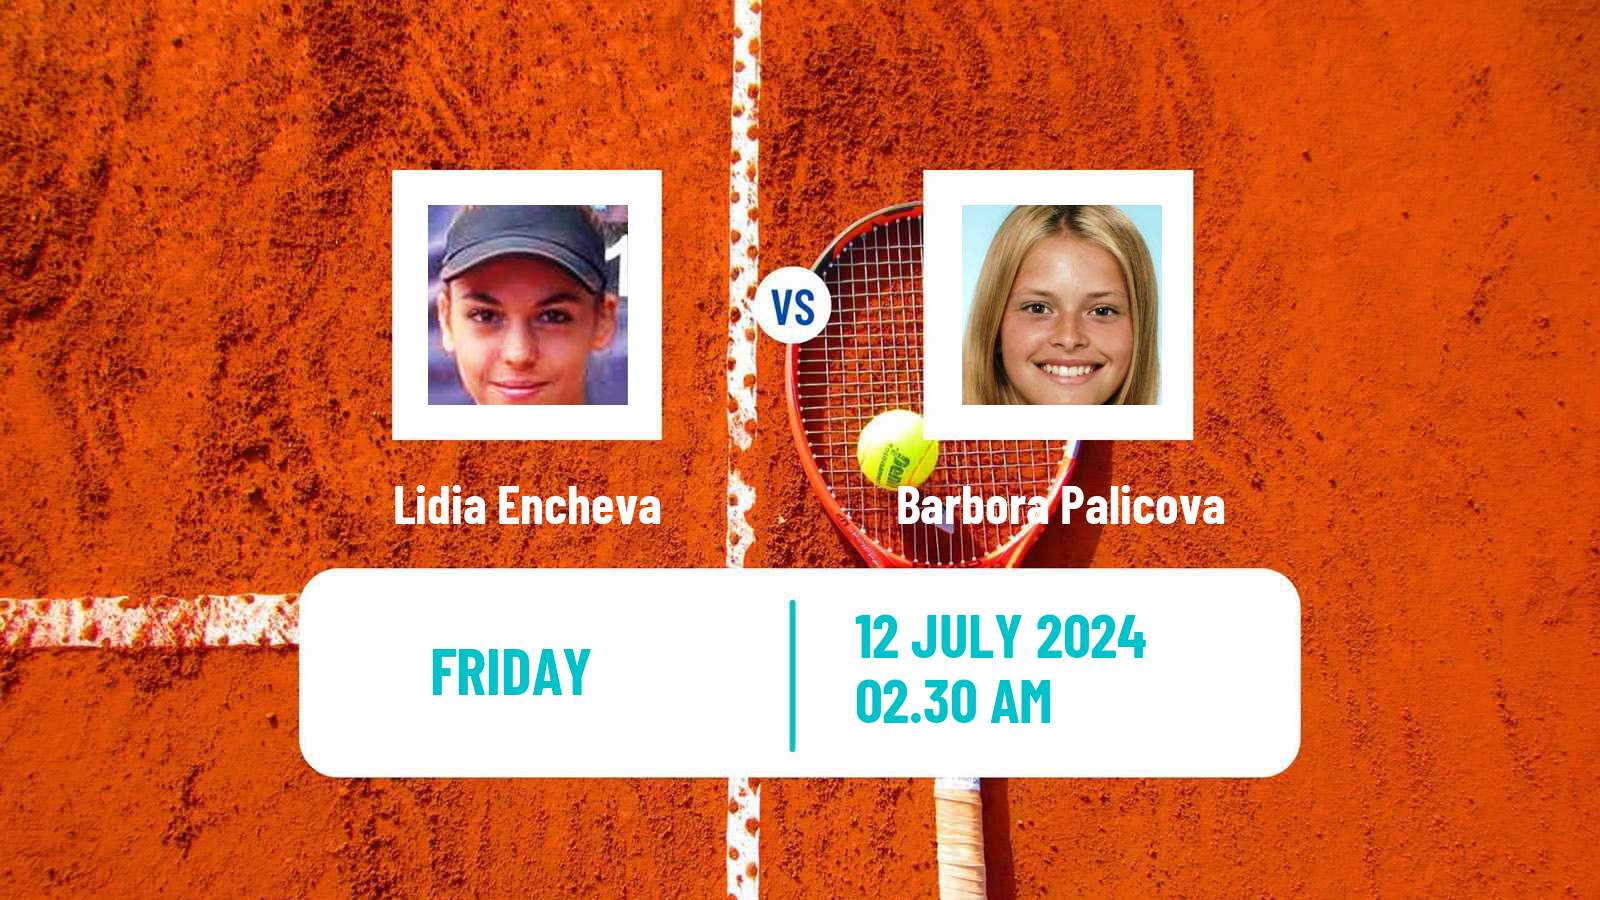 Tennis ITF W35 Buzau Women Lidia Encheva - Barbora Palicova